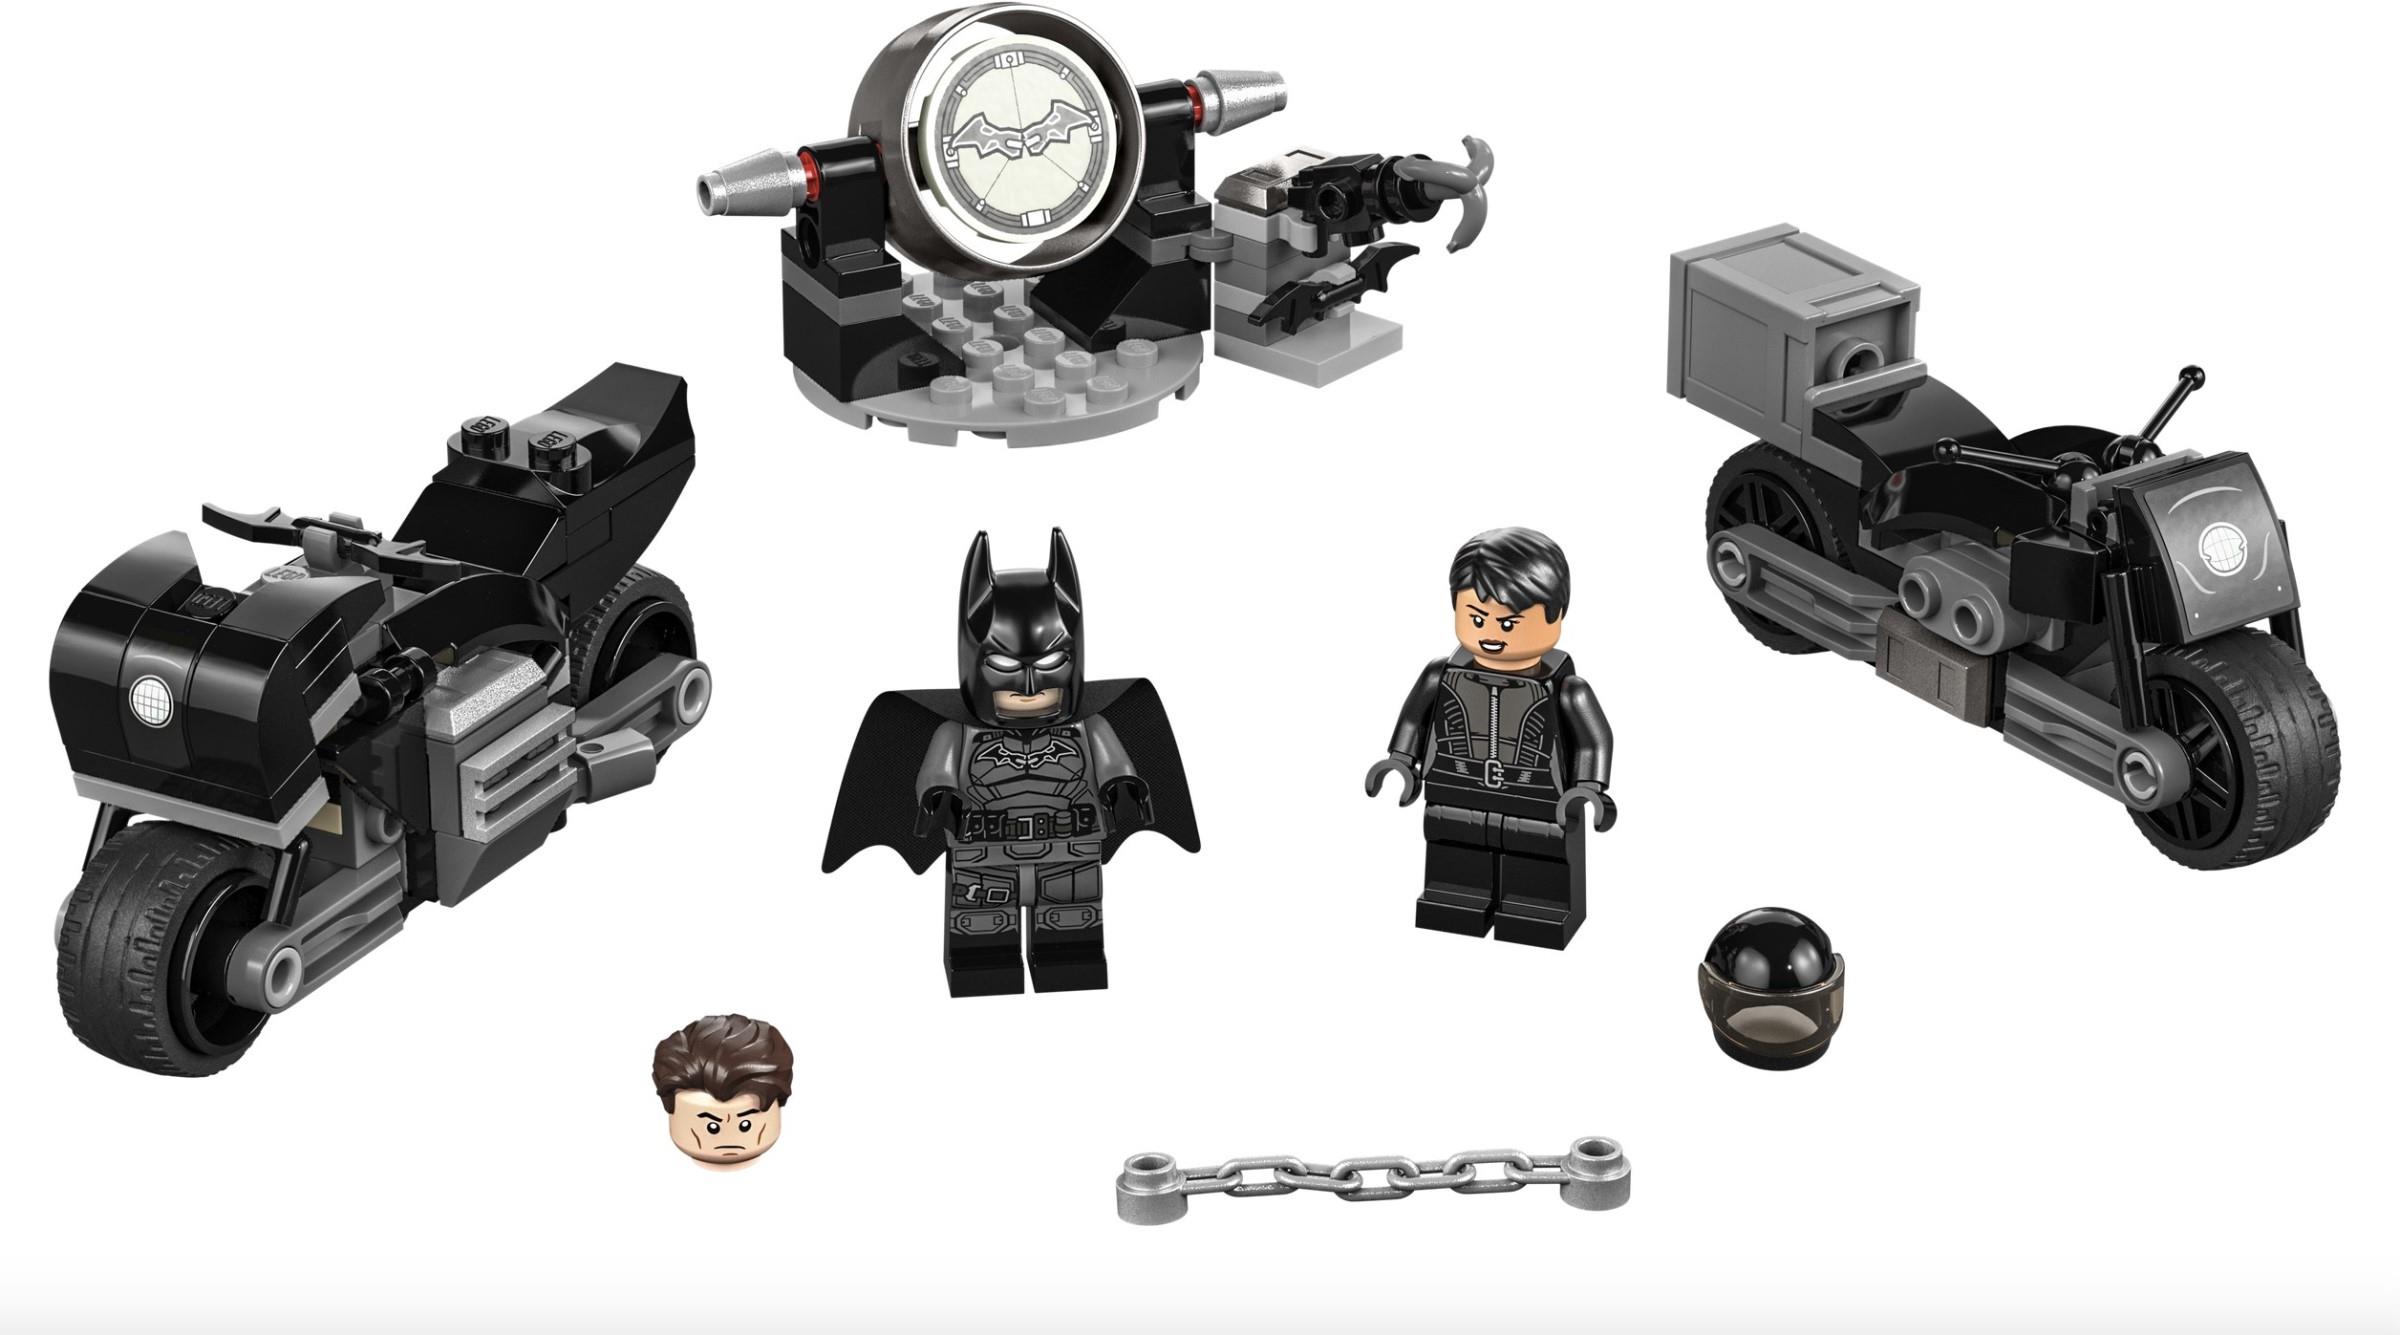 The Batman 2022 LEGO sets: Batcave, Riddler, Catwoman chase